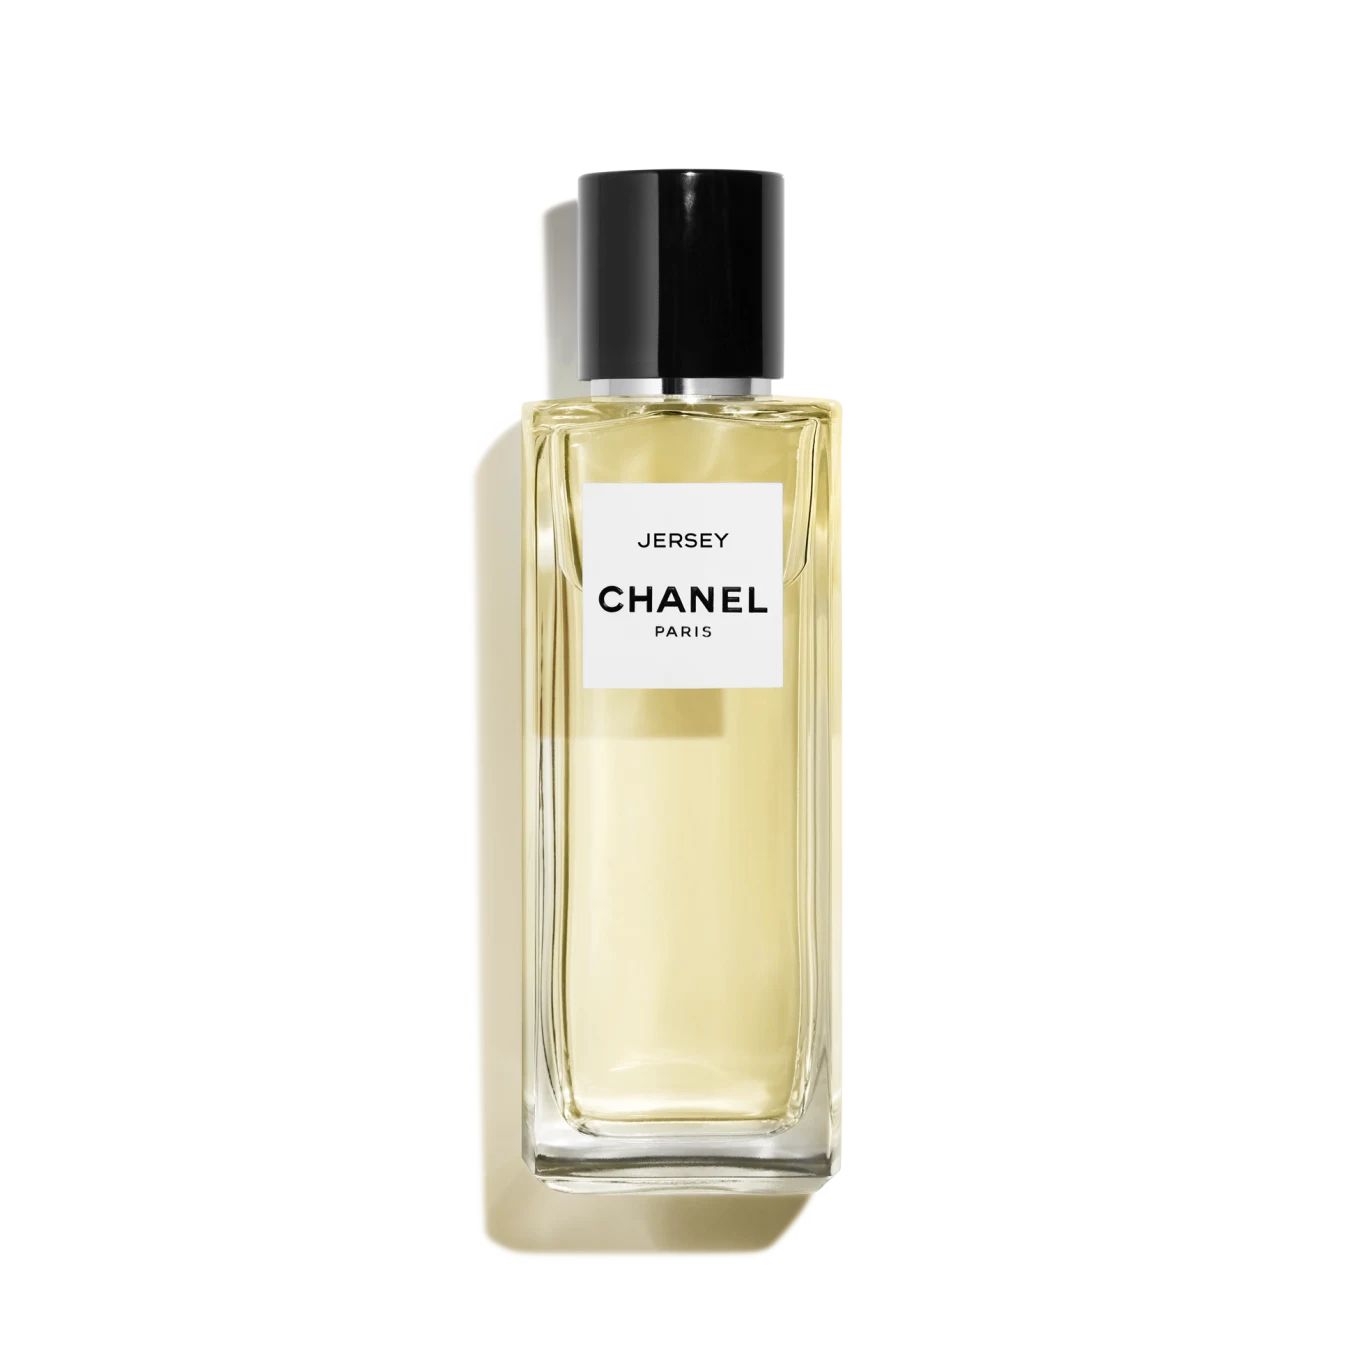 JERSEY | Chanel, Inc. (US)